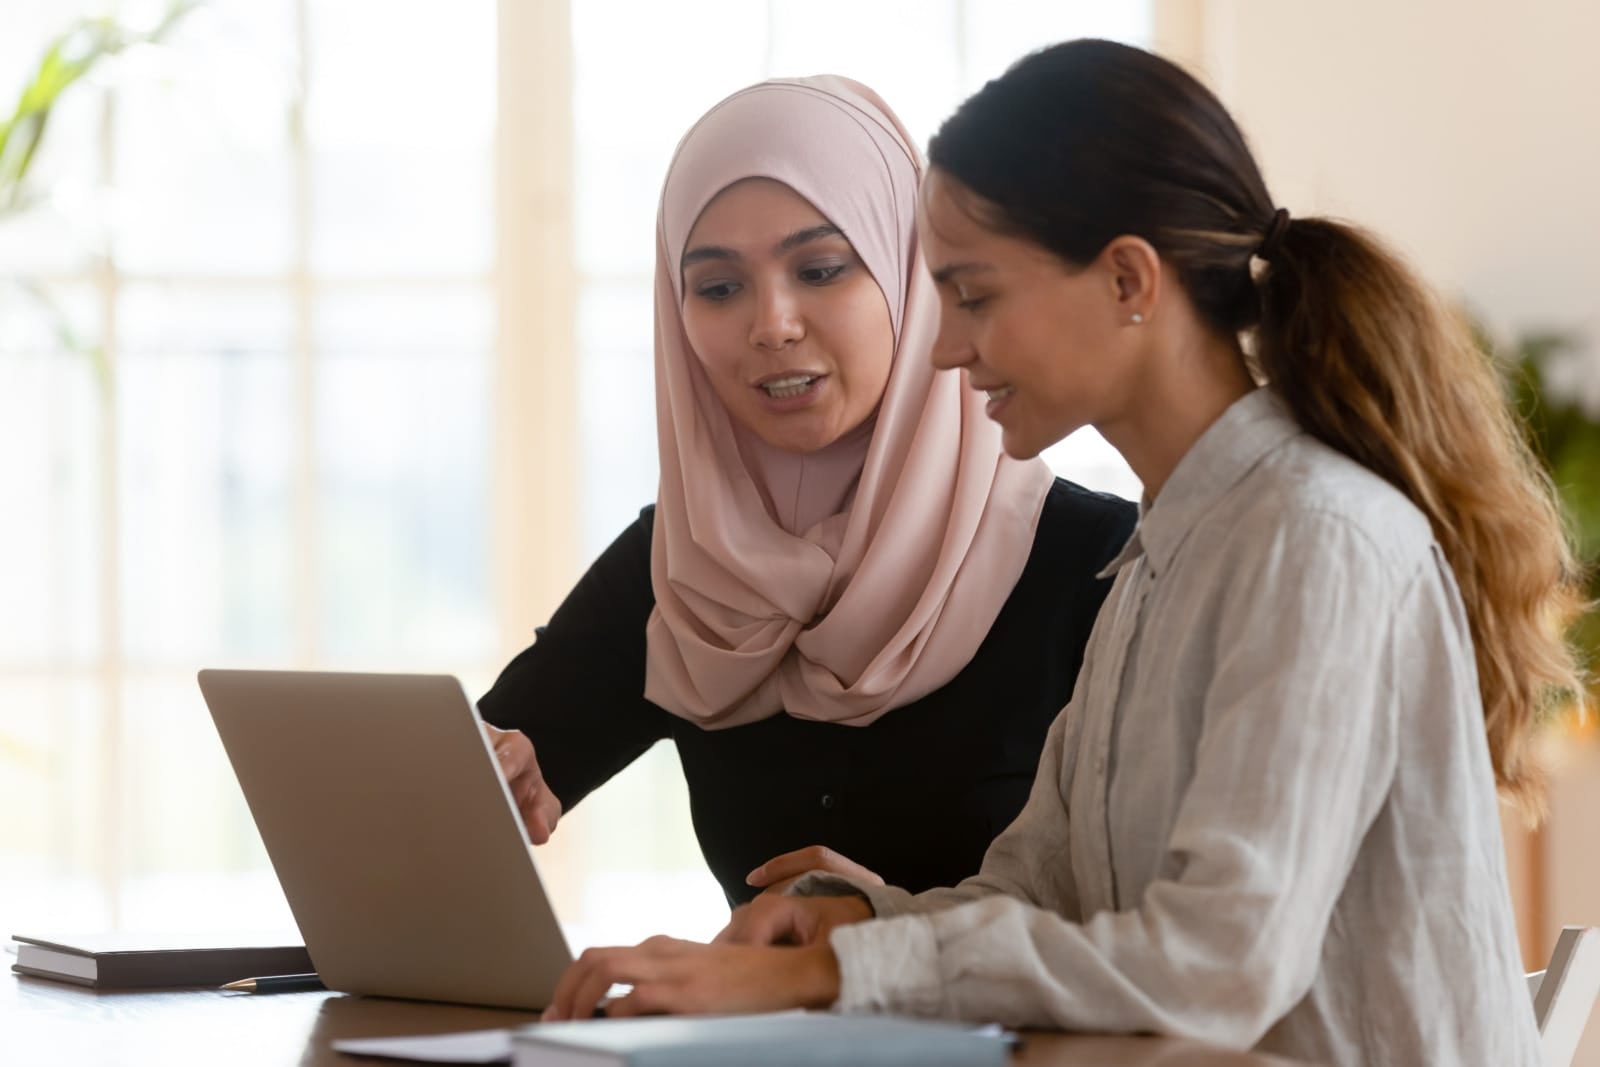 colleagues discussing work laptop 2 hijab muslim women 123rf